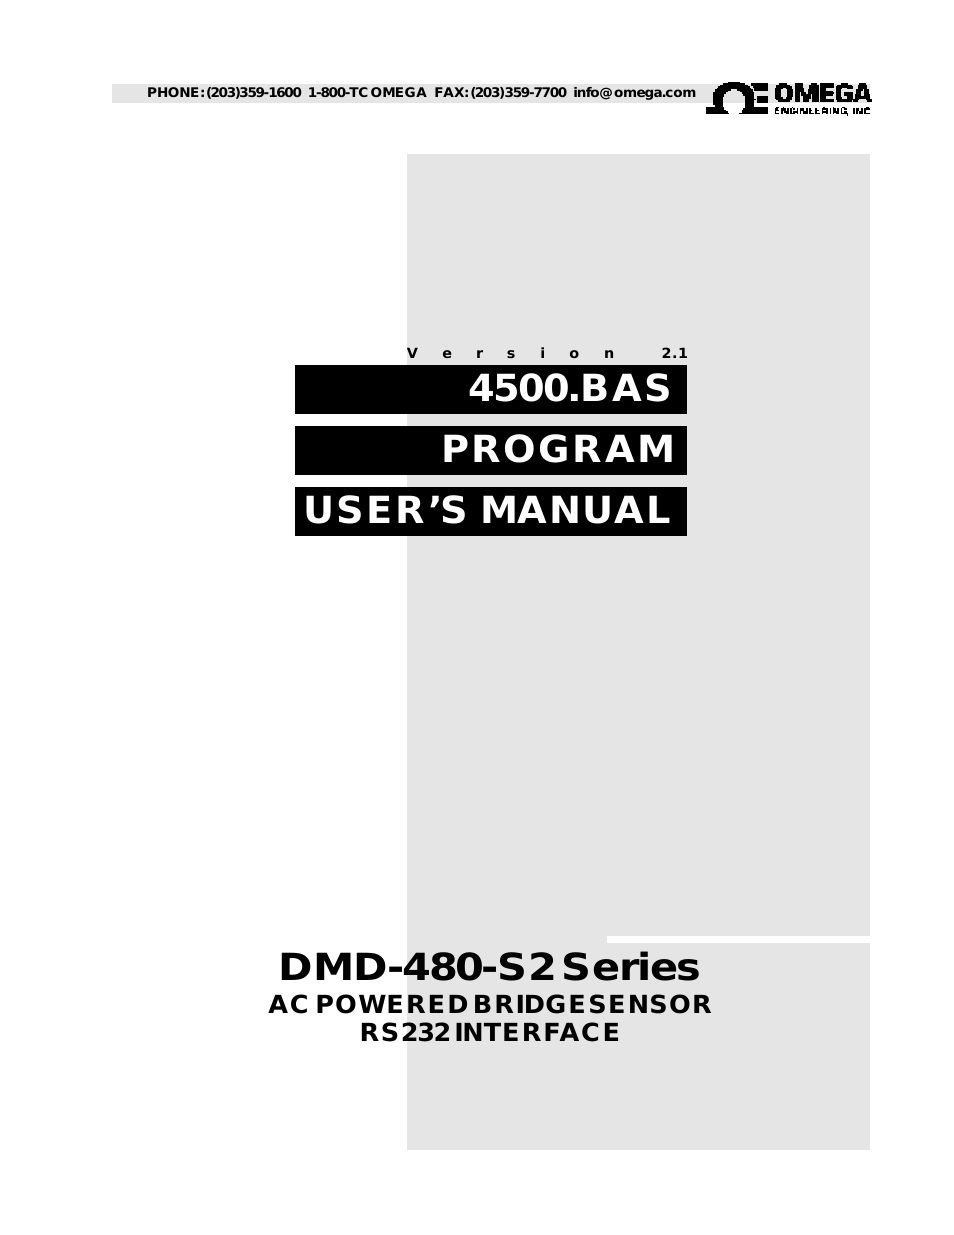 DMD-480-S2